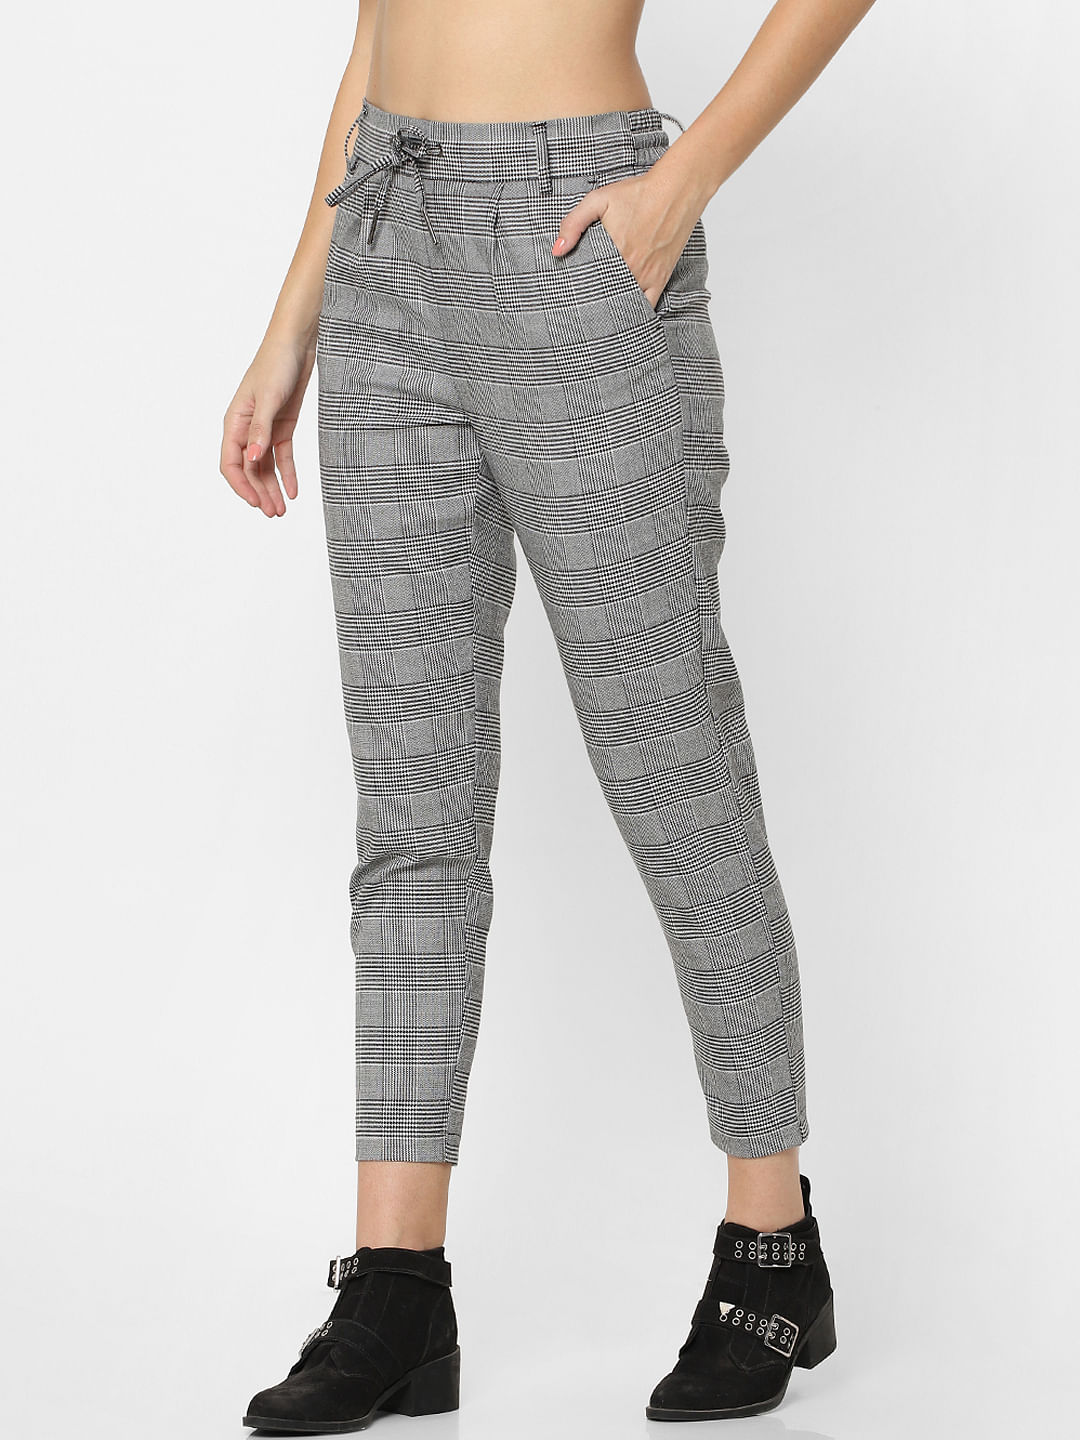 Buy Men Grey Check Slim Fit Formal Trousers Online - 729613 | Peter England